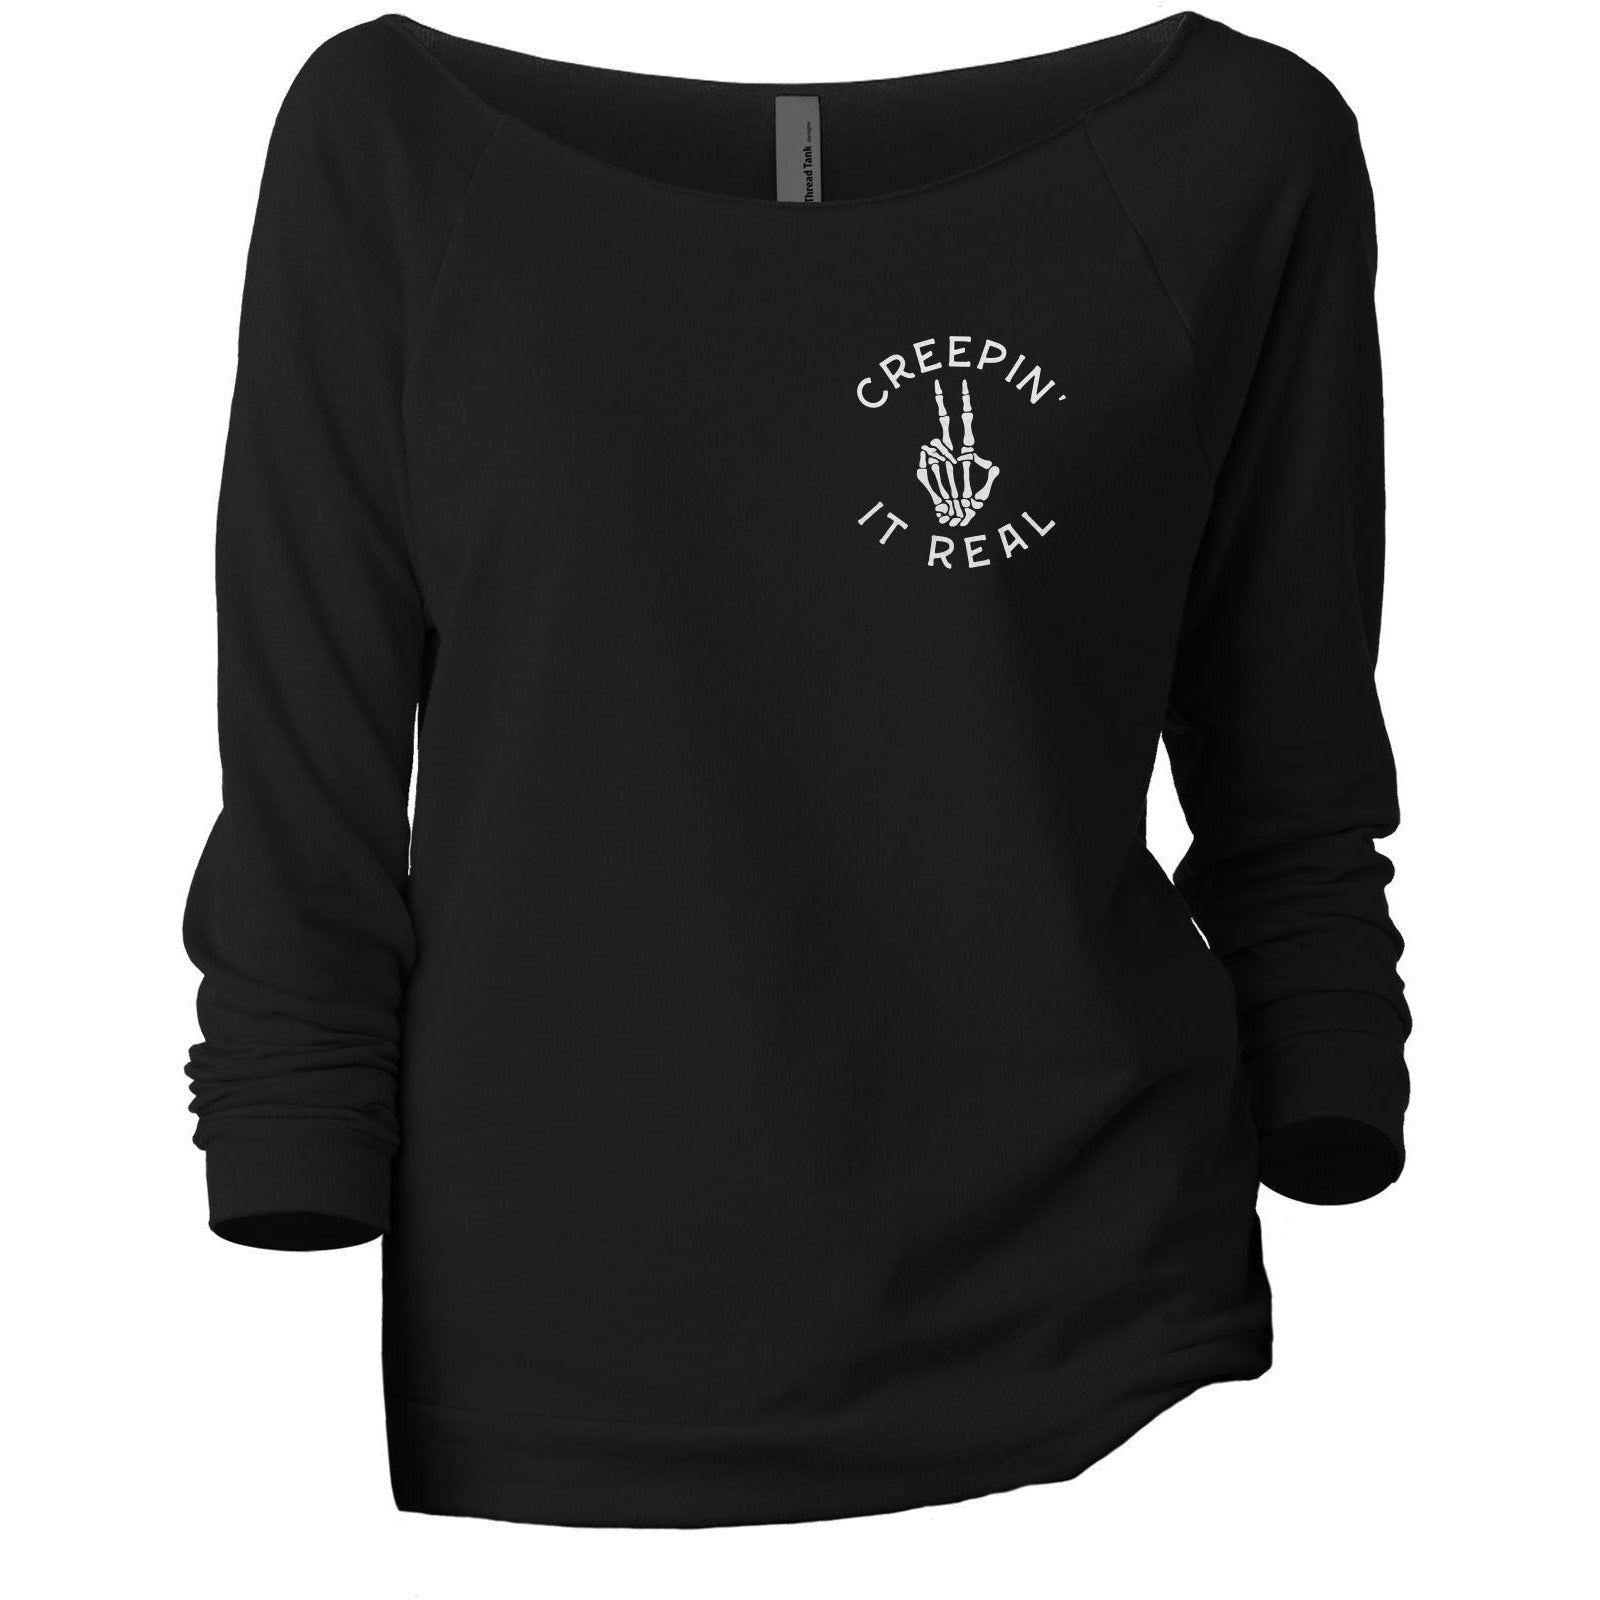 Creepin It Real Women's Graphic Printed Lightweight Slouchy 3/4 Sleeves Sweatshirt Sport Black